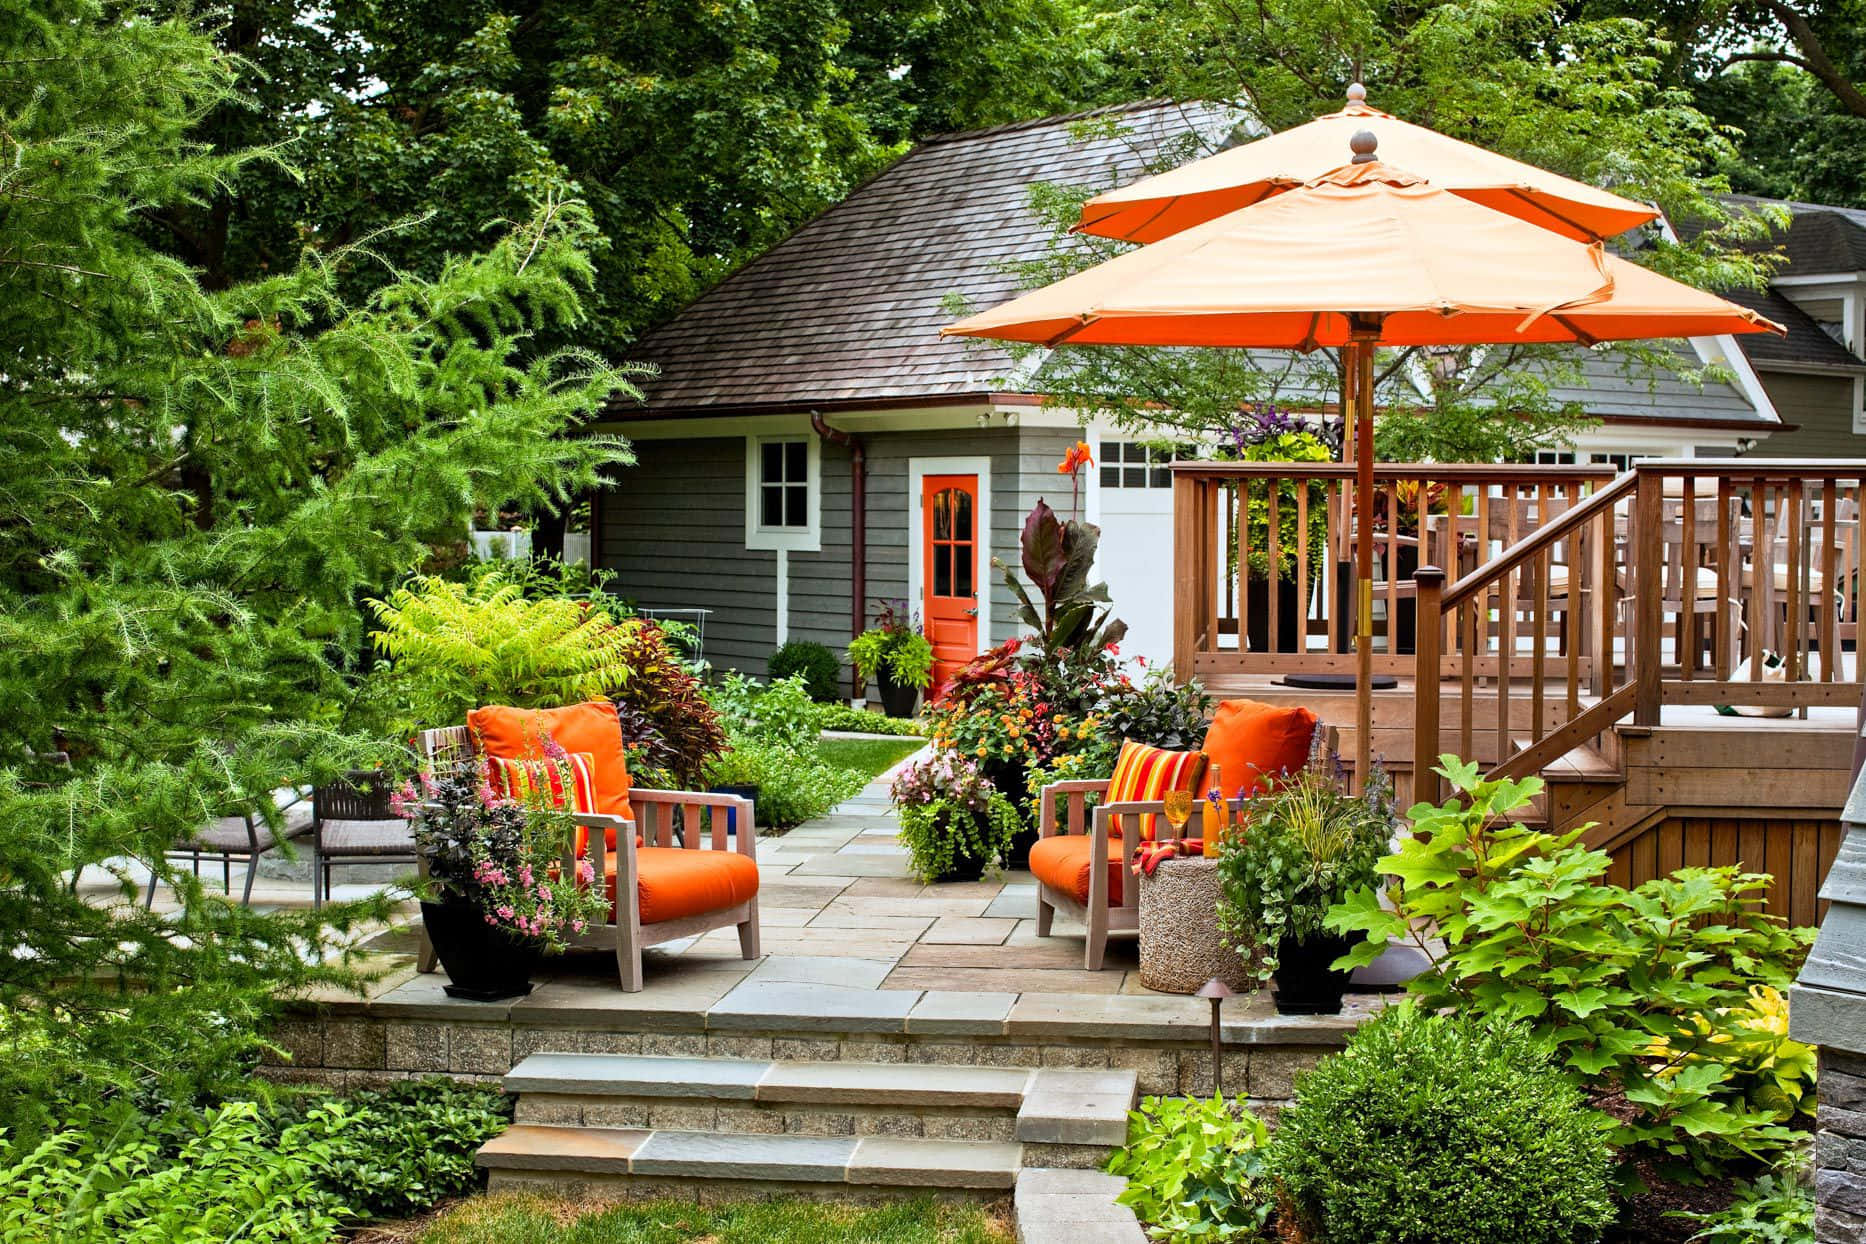 A Backyard With Orange Furniture And An Umbrella